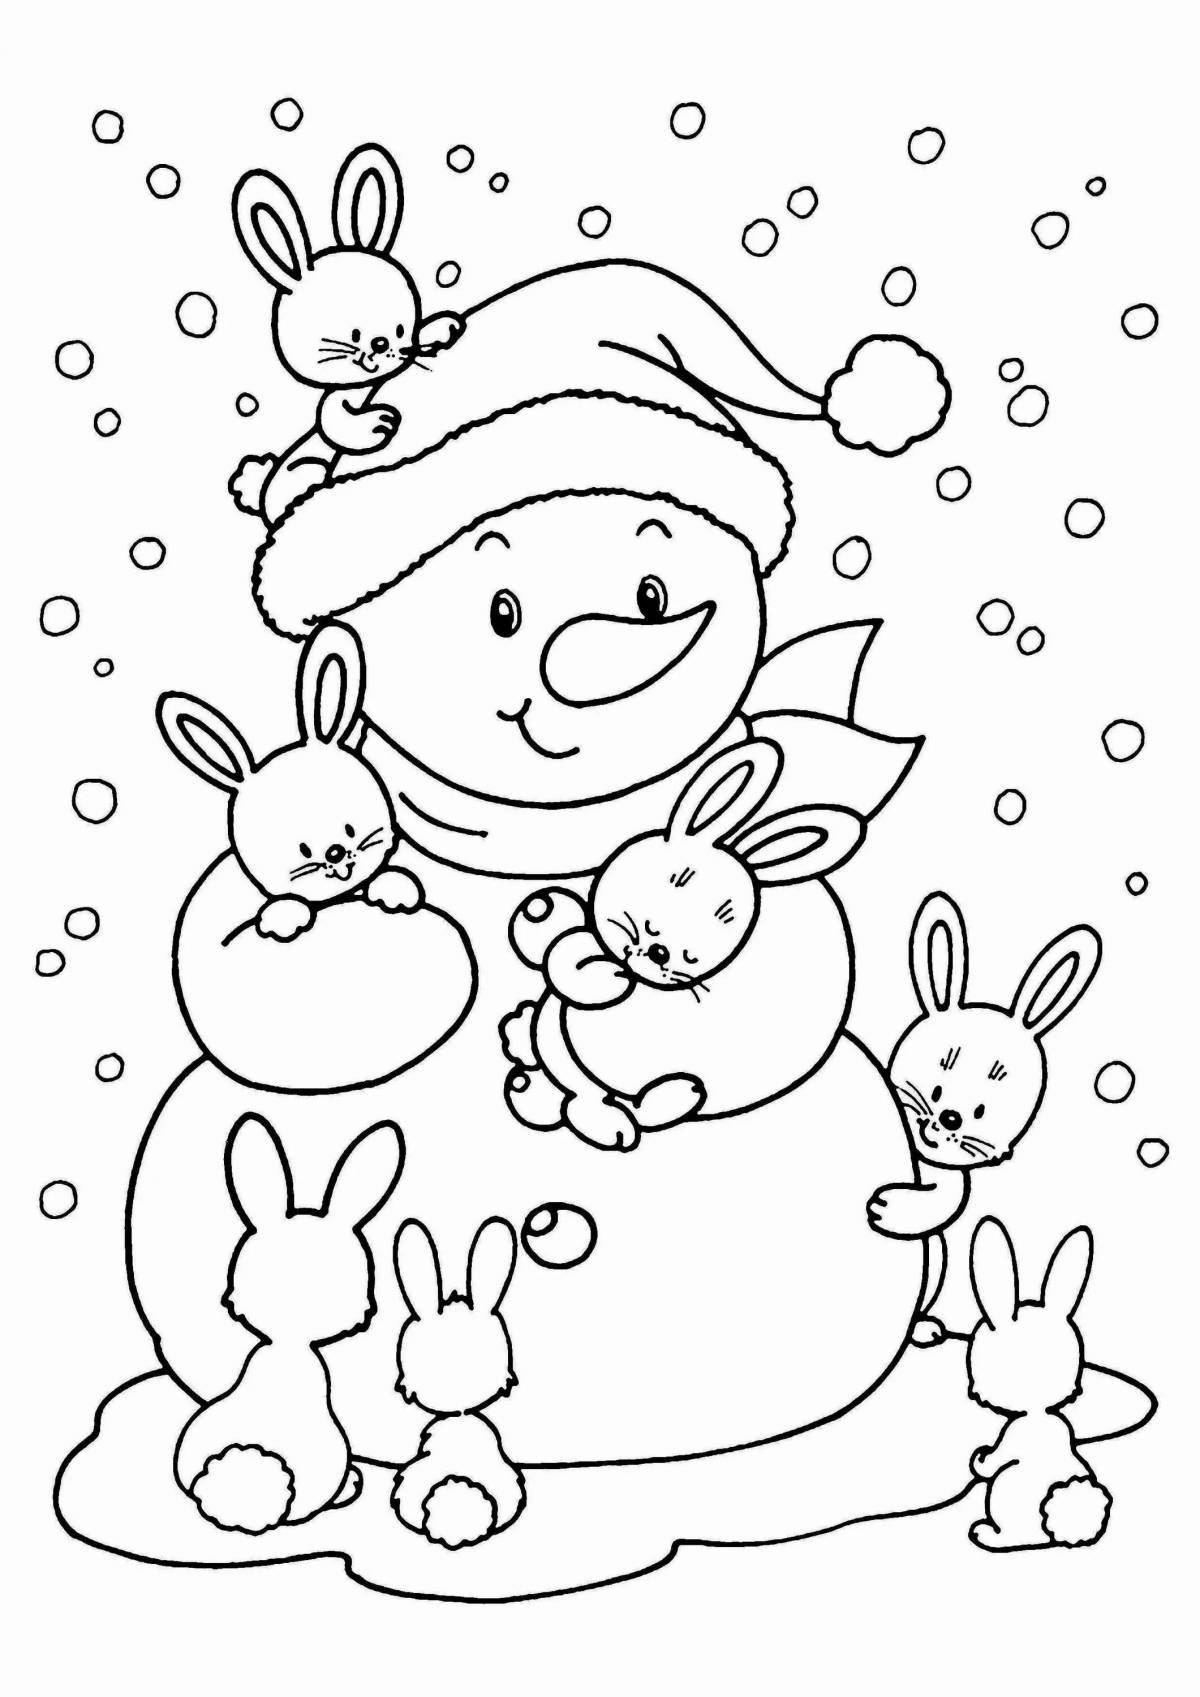 Coloring page adorable snowman postcard